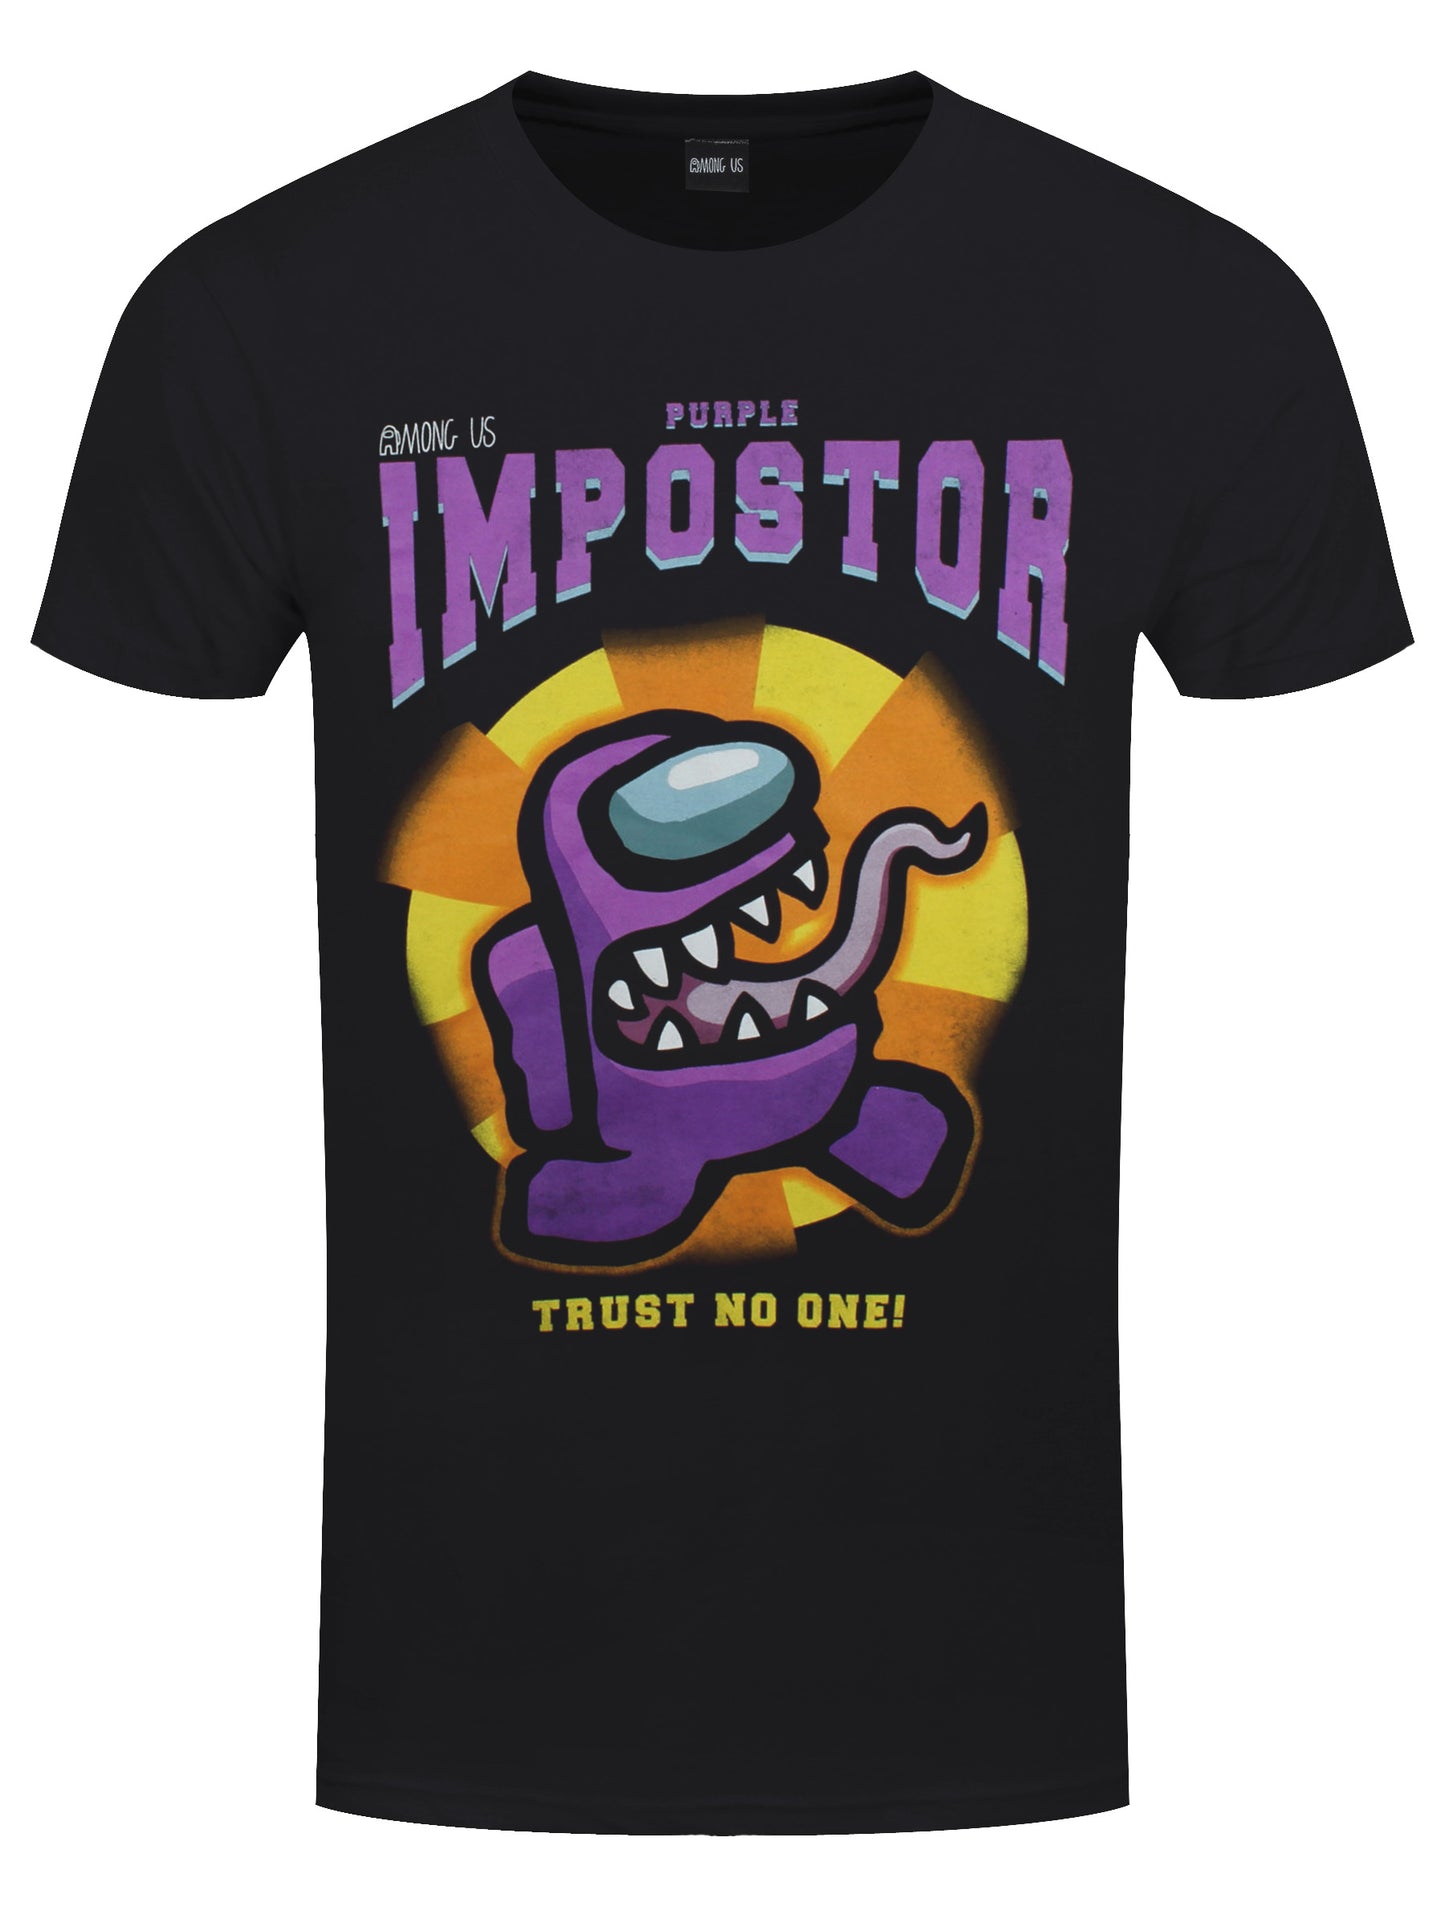 Among Us Purple Impostor Men's Black T-Shirt